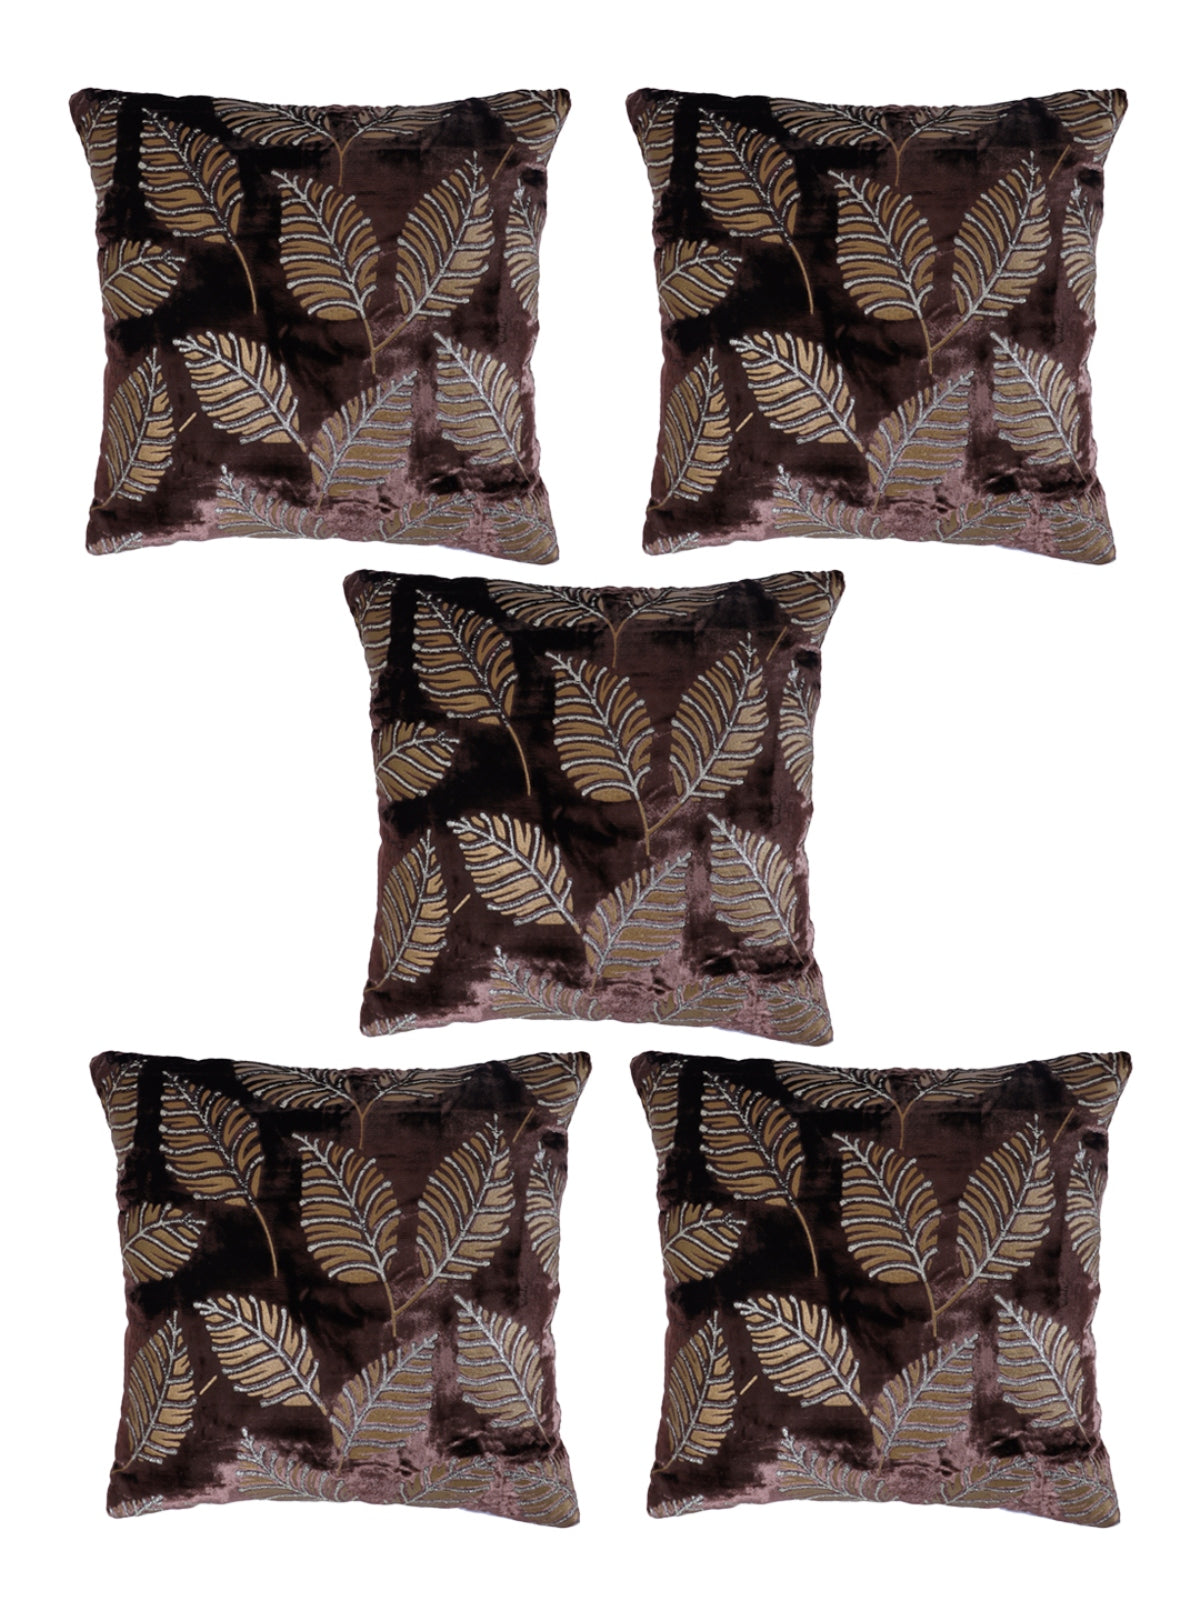 Velvet Leaf Designer Cushion Cover 16x16 Inche, Set of 5 - Coffee Brown